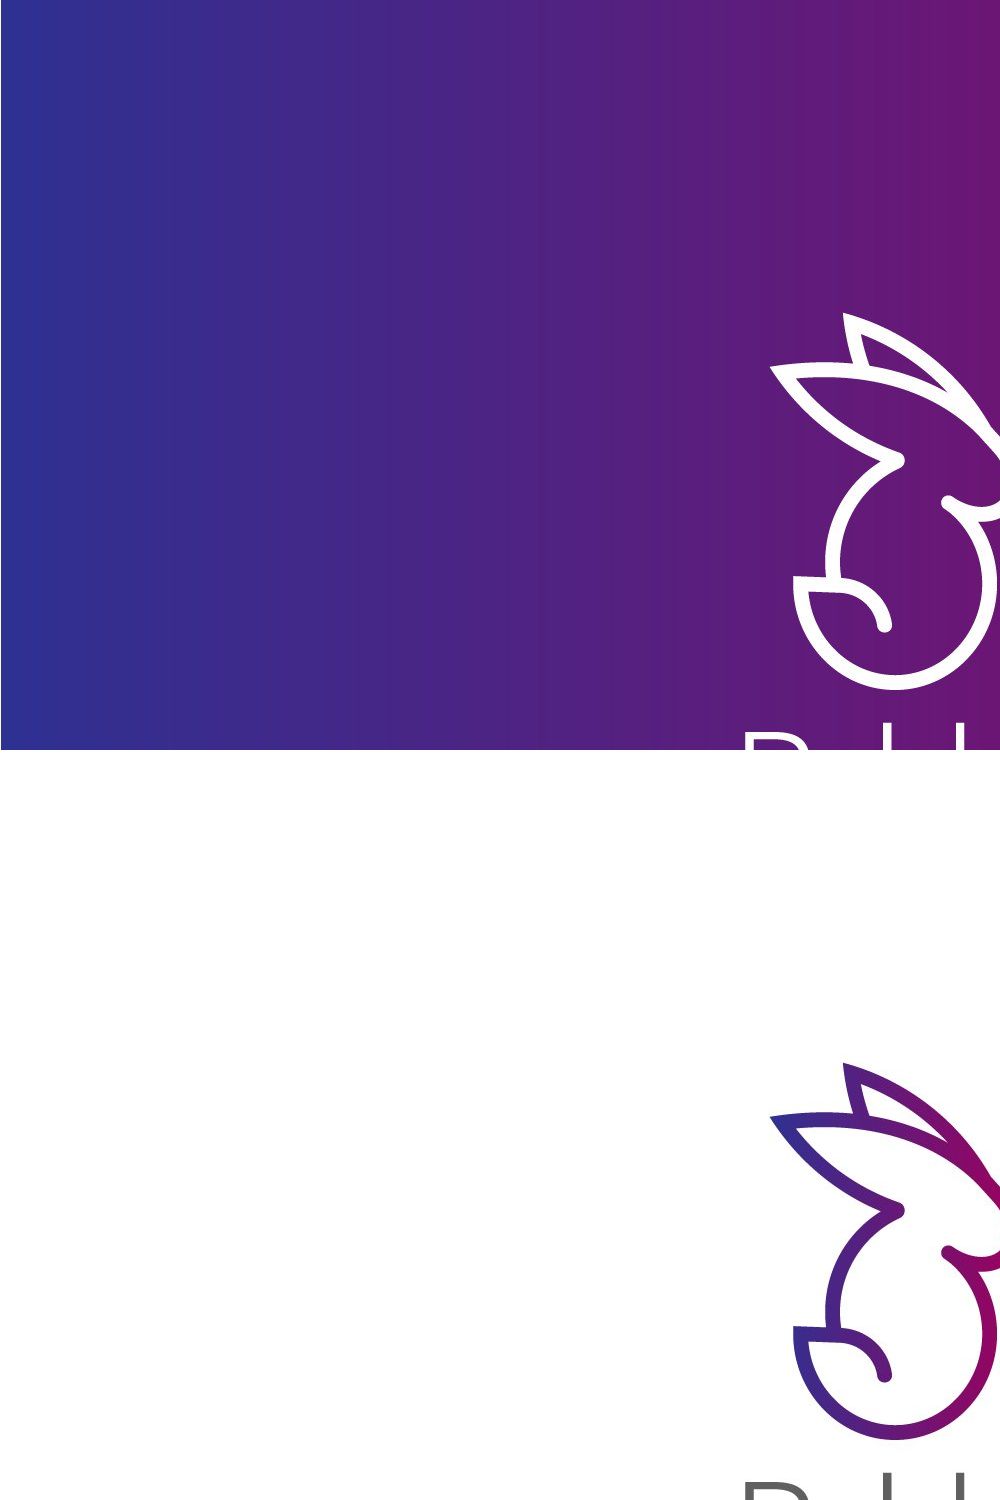 rabbit logo pinterest preview image.